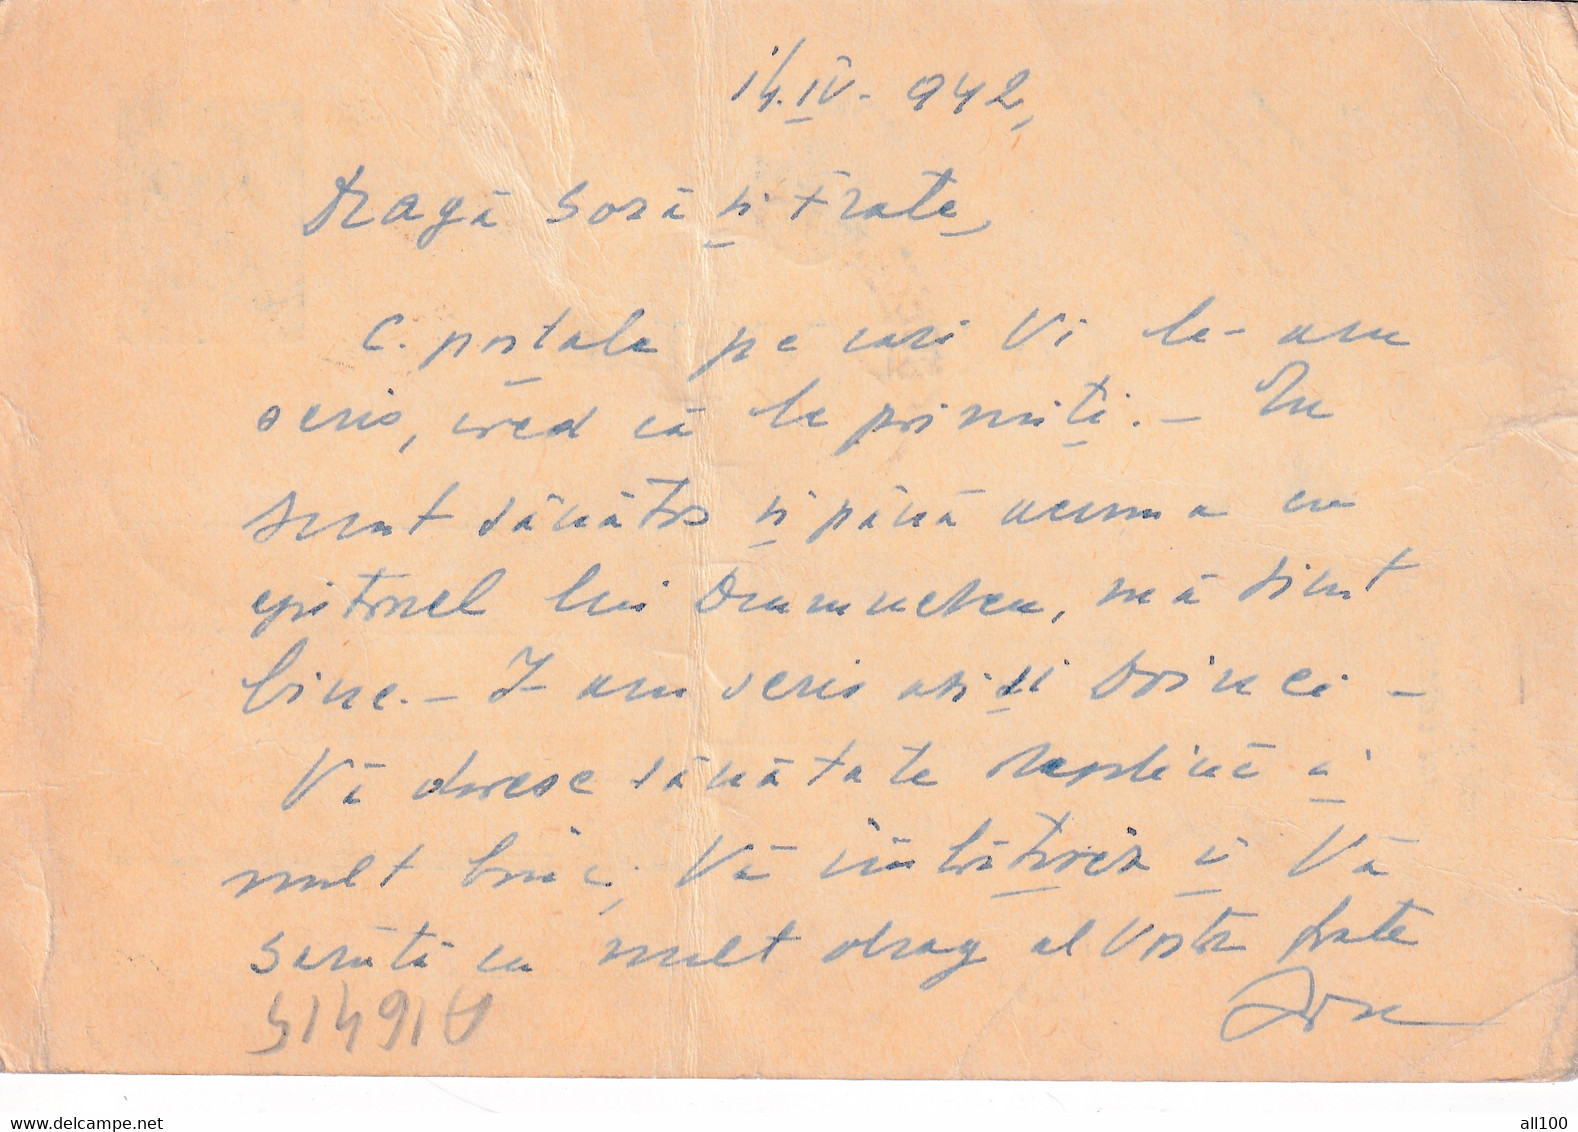 A16415 - MILITARY LETTER CENZURAT CENZORED SIGHISOARA  POST CARD  1942 - World War 2 Letters